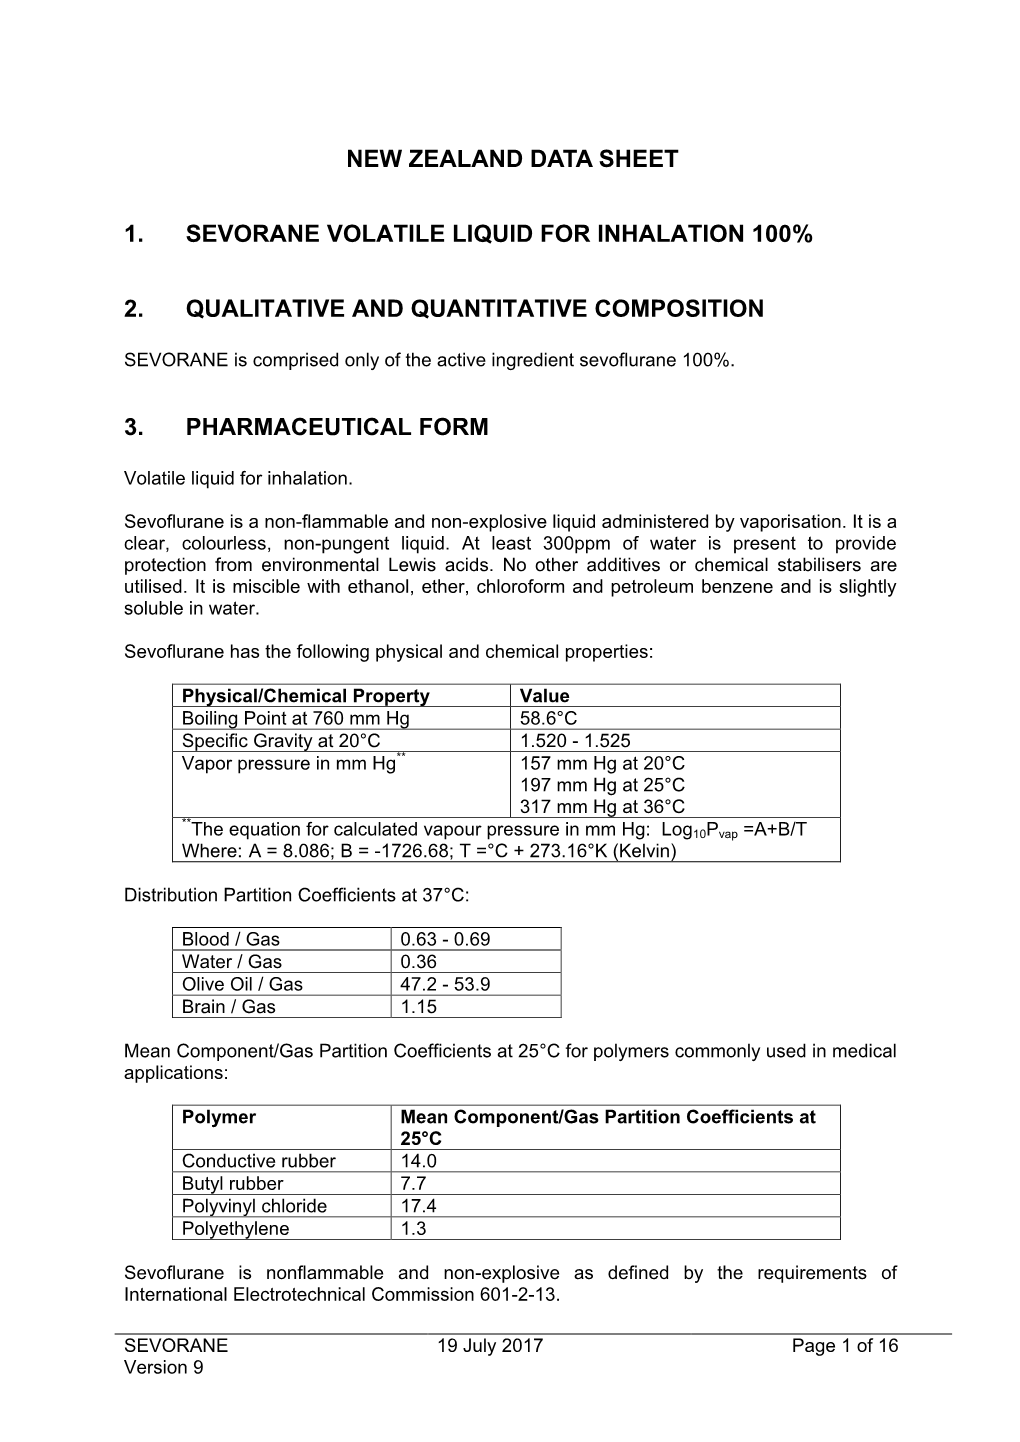 New Zealand Data Sheet 1. Sevorane Volatile Liquid for Inhalation 100% 2